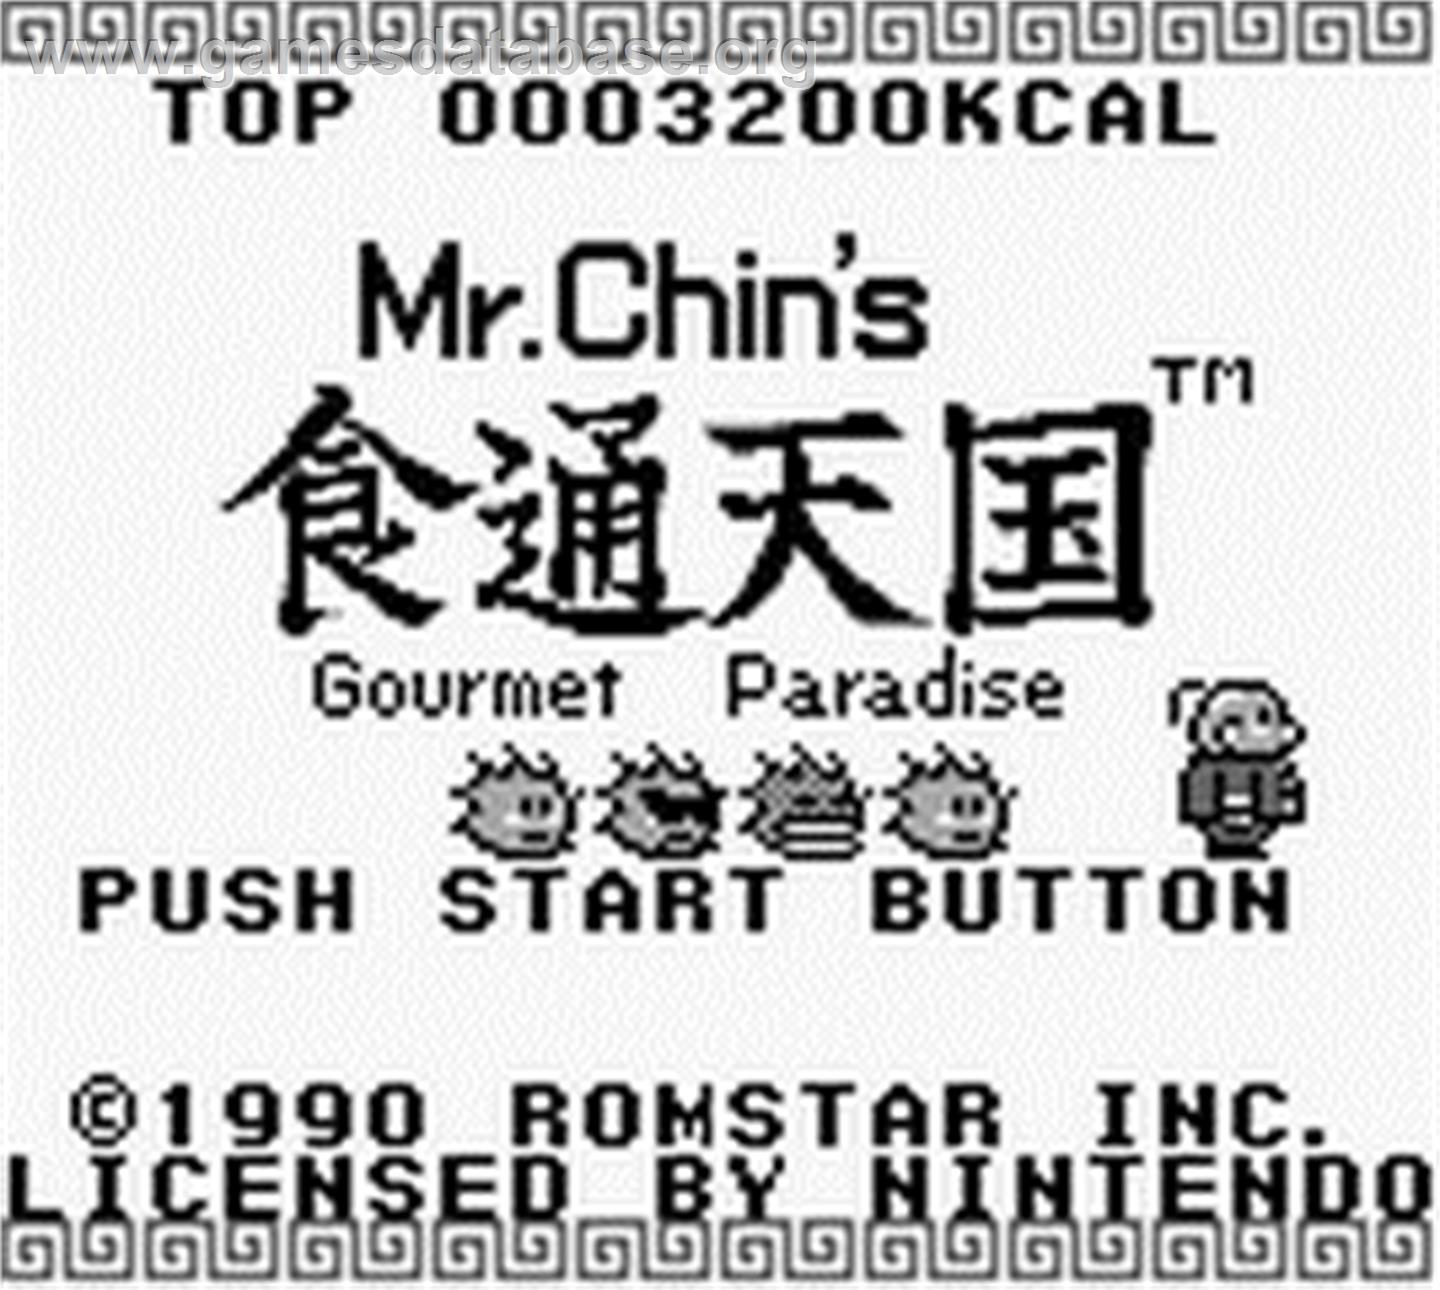 Mr. Chin's Gourmet Paradise - Nintendo Game Boy - Artwork - Title Screen